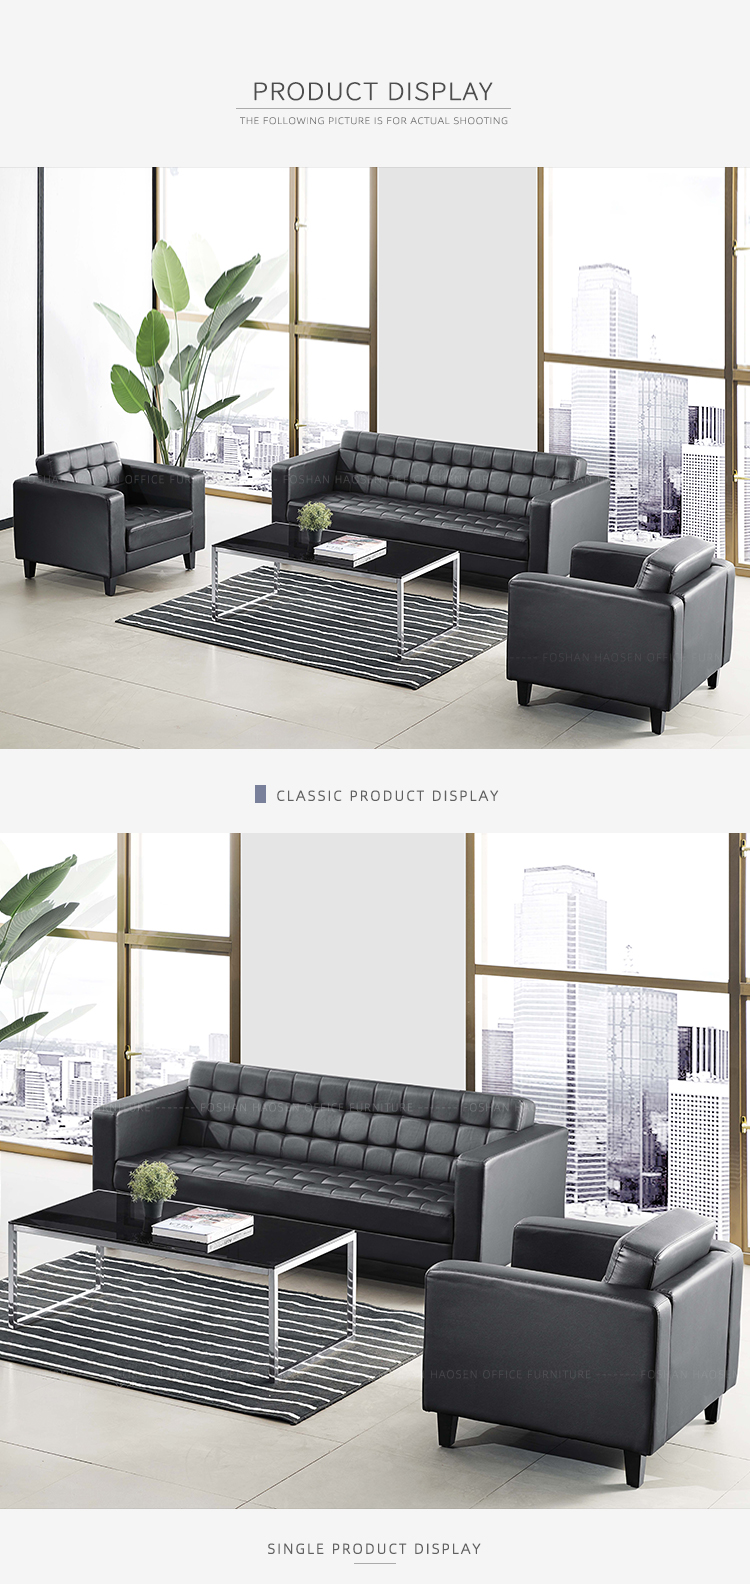 Foshan HAOSEN furniture office/home Living Room Modern leather sofa set (PU leather Black,SF119)